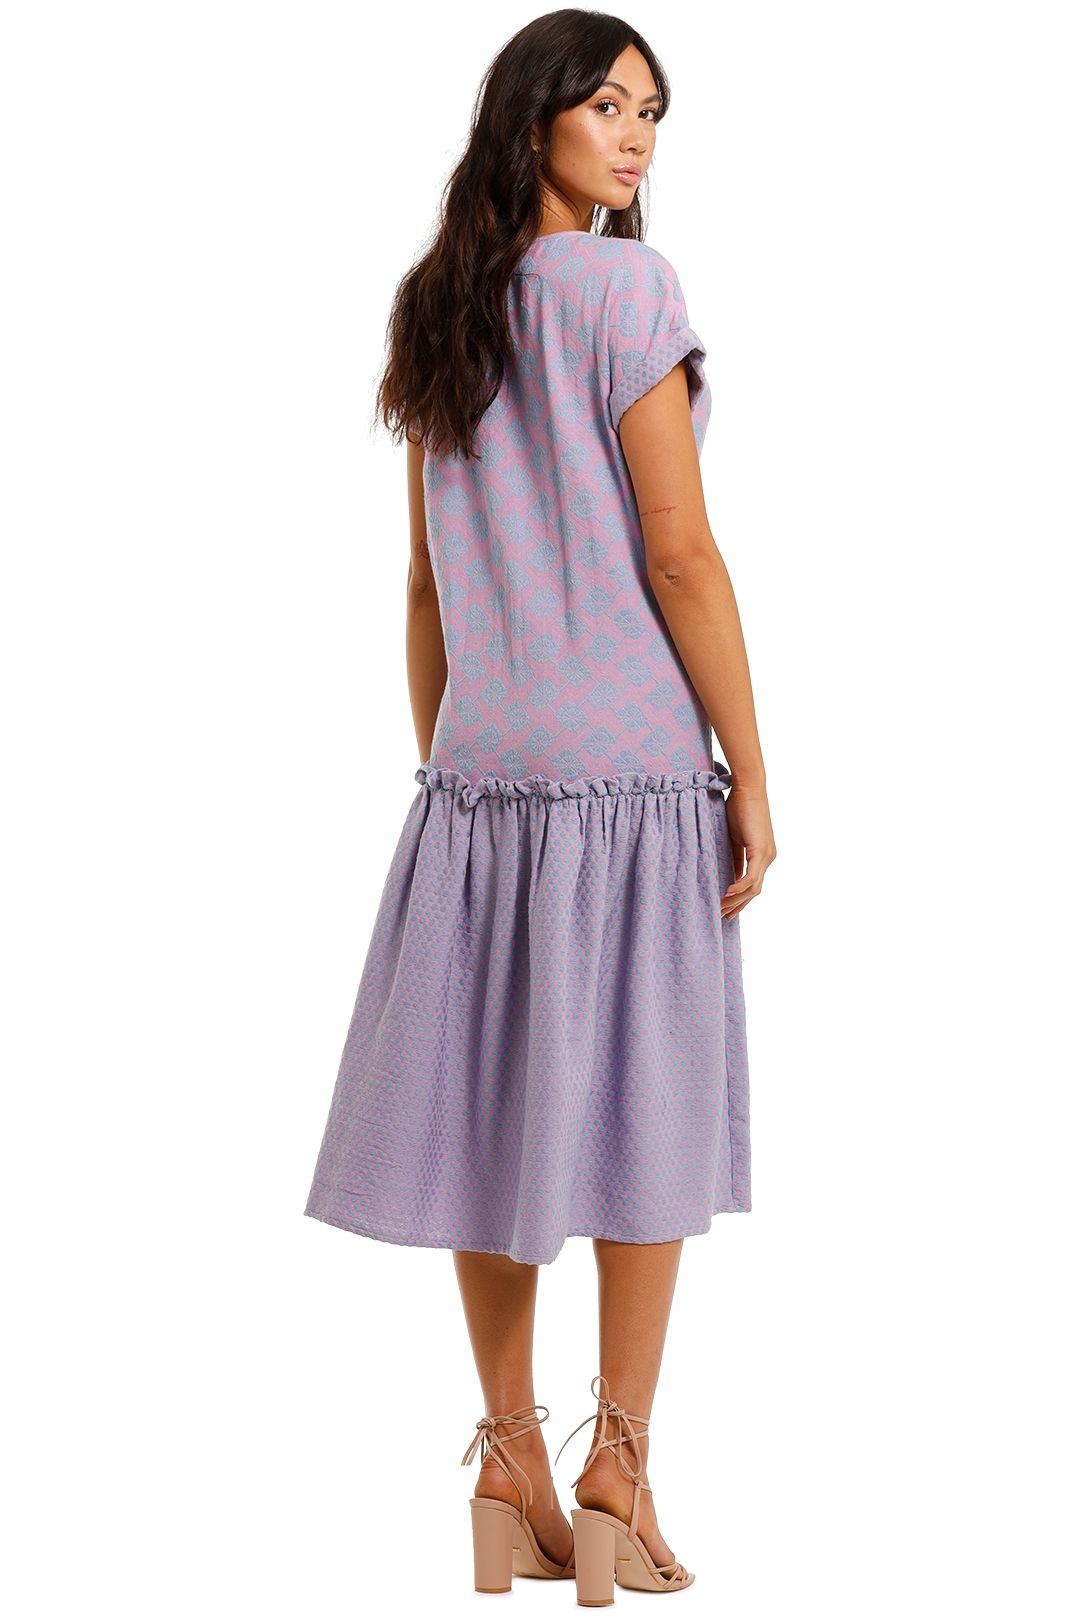 Cecilie Copenhagen Signe Dress Lilac short sleeve